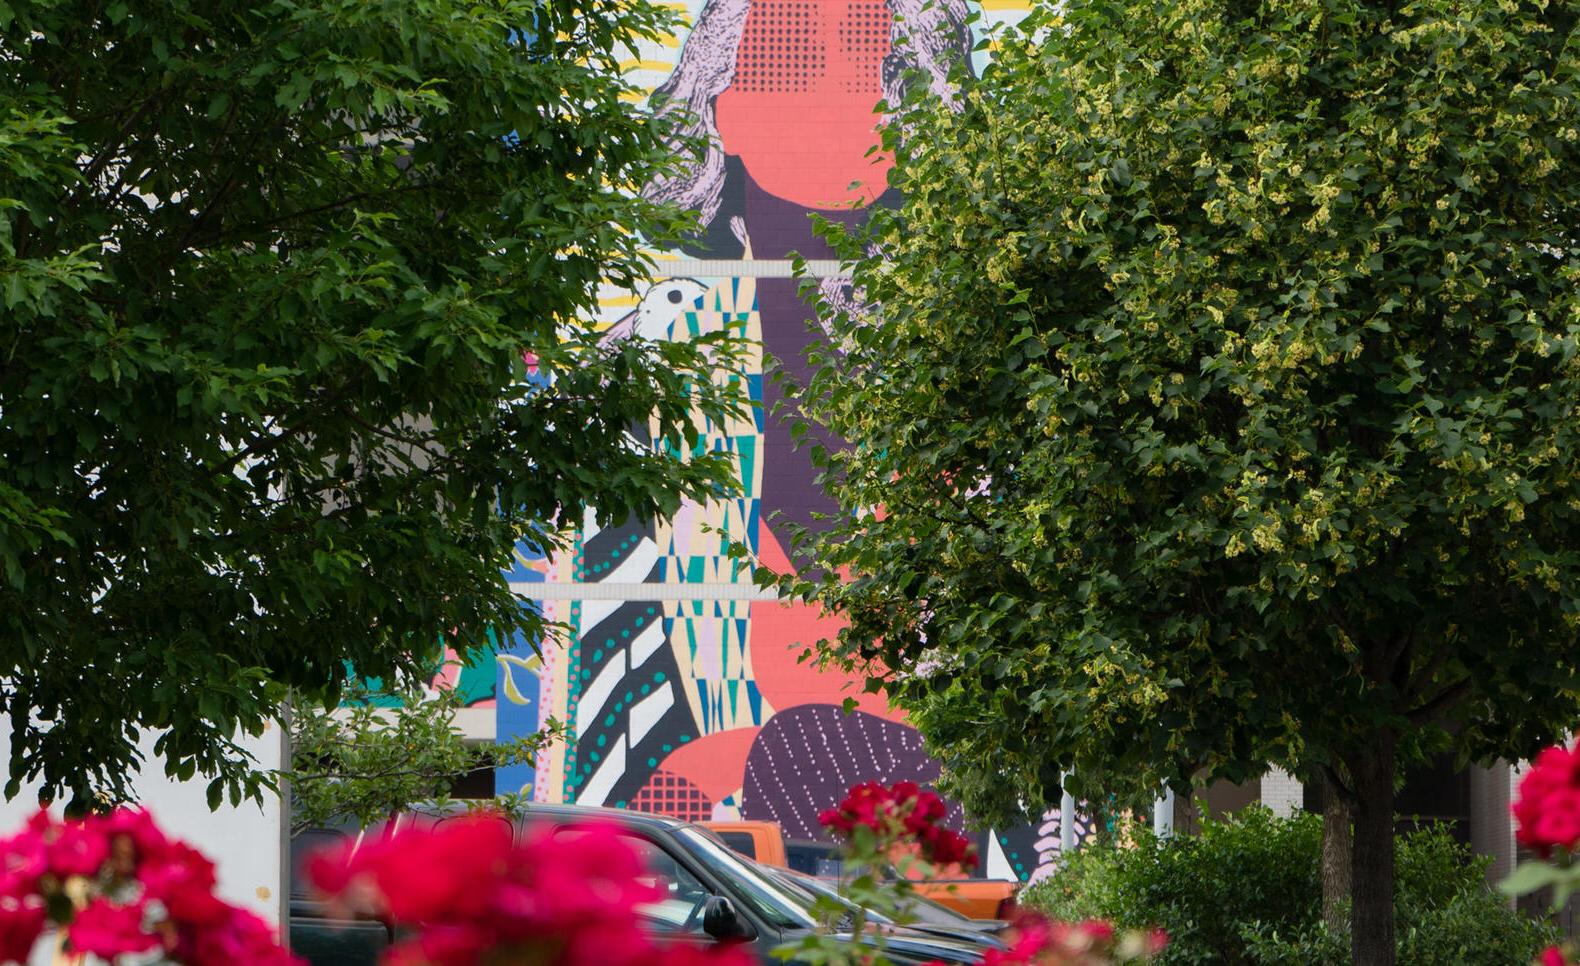 FAILE mural peeking through trees and flowers